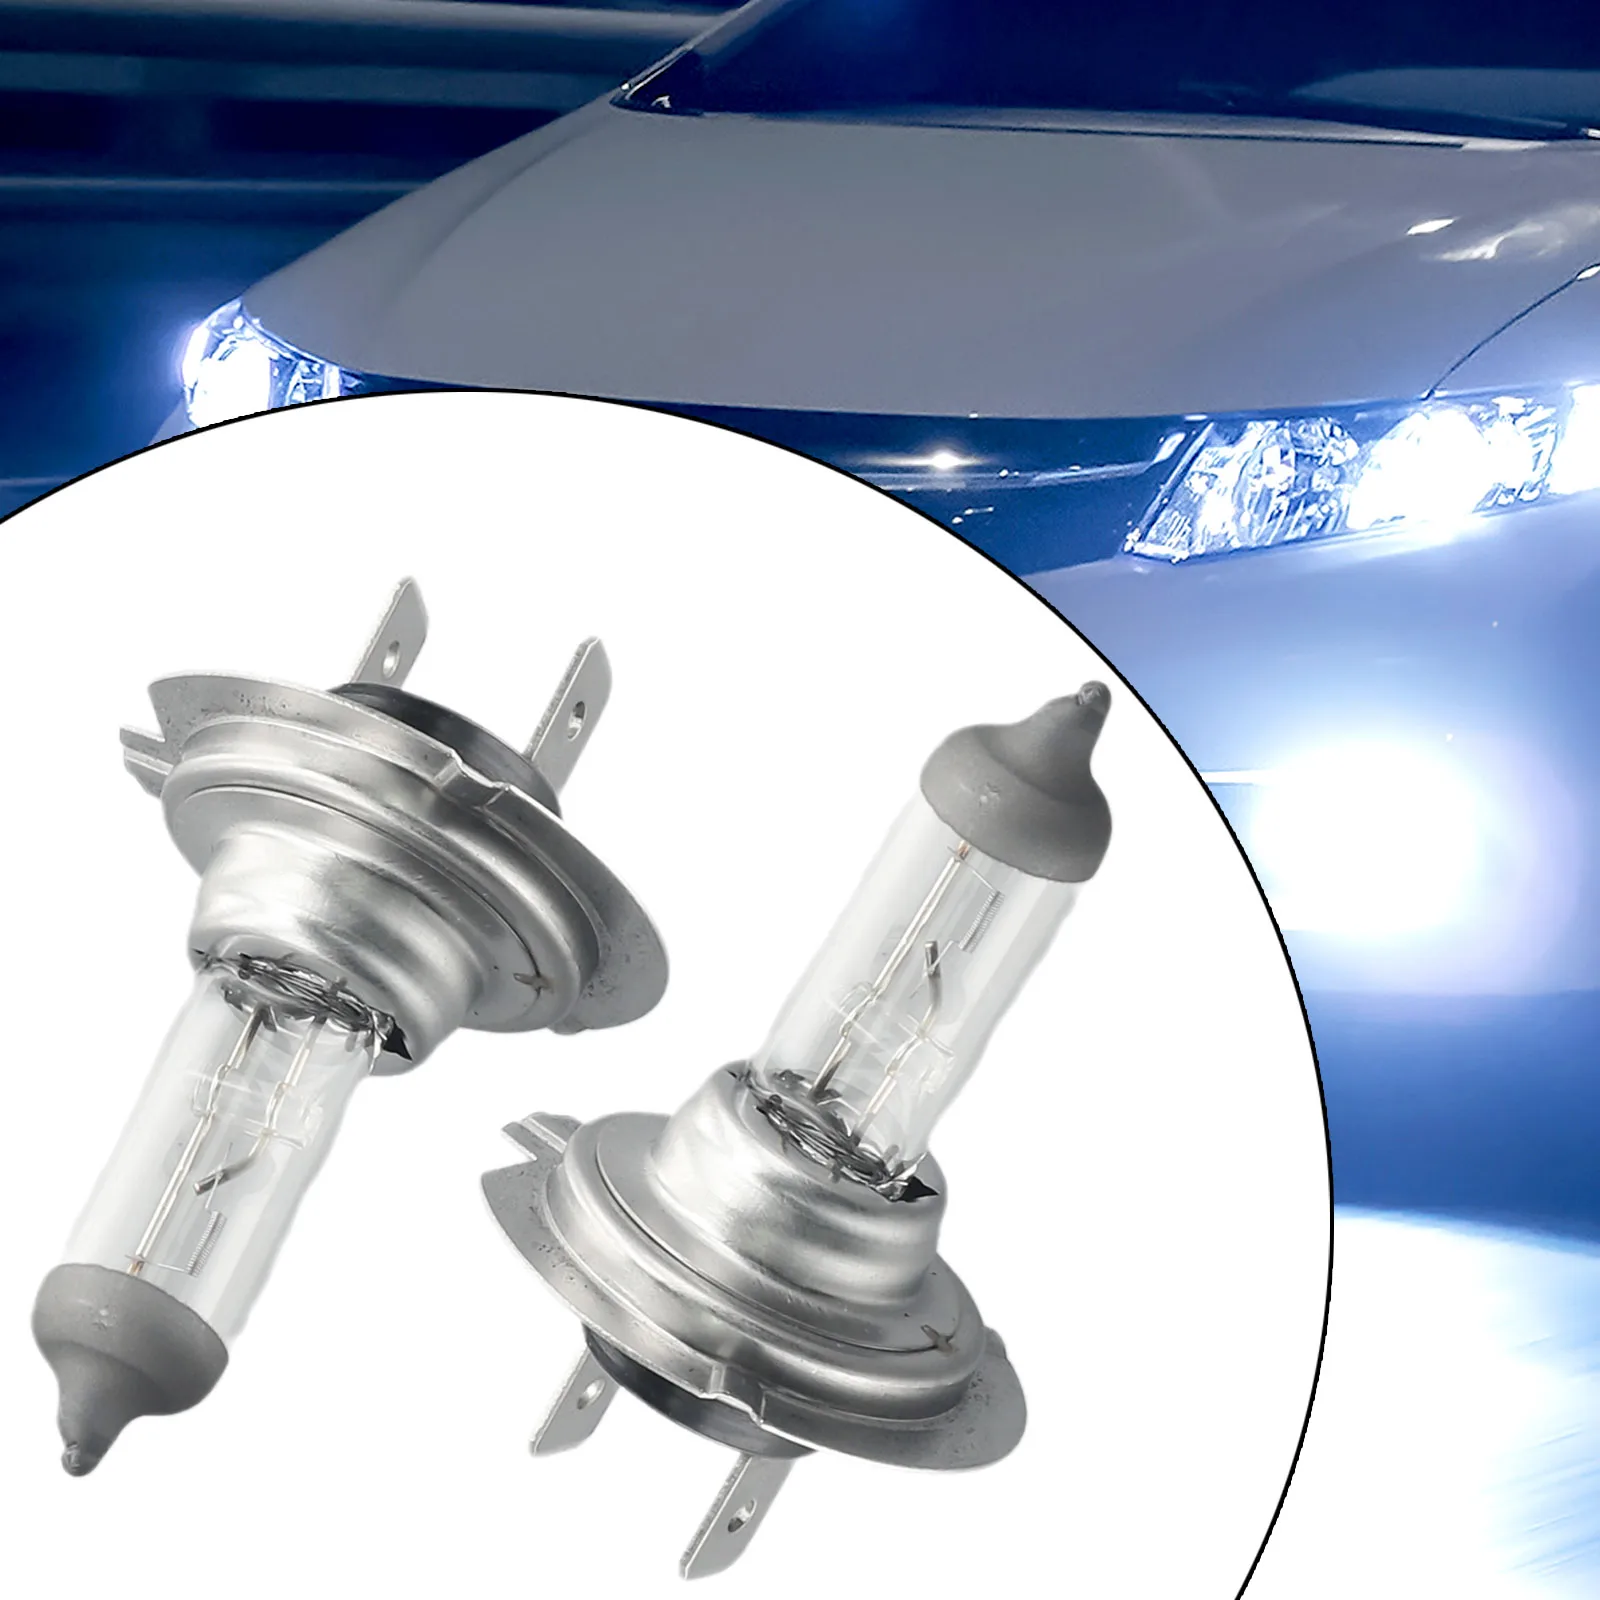 

2pcs/Set Car H7 Xenon Halogen Headlight 12V 55W 6000K White Car High/Low Beam Light Headlight Bulbs Super Bright Car Accessories